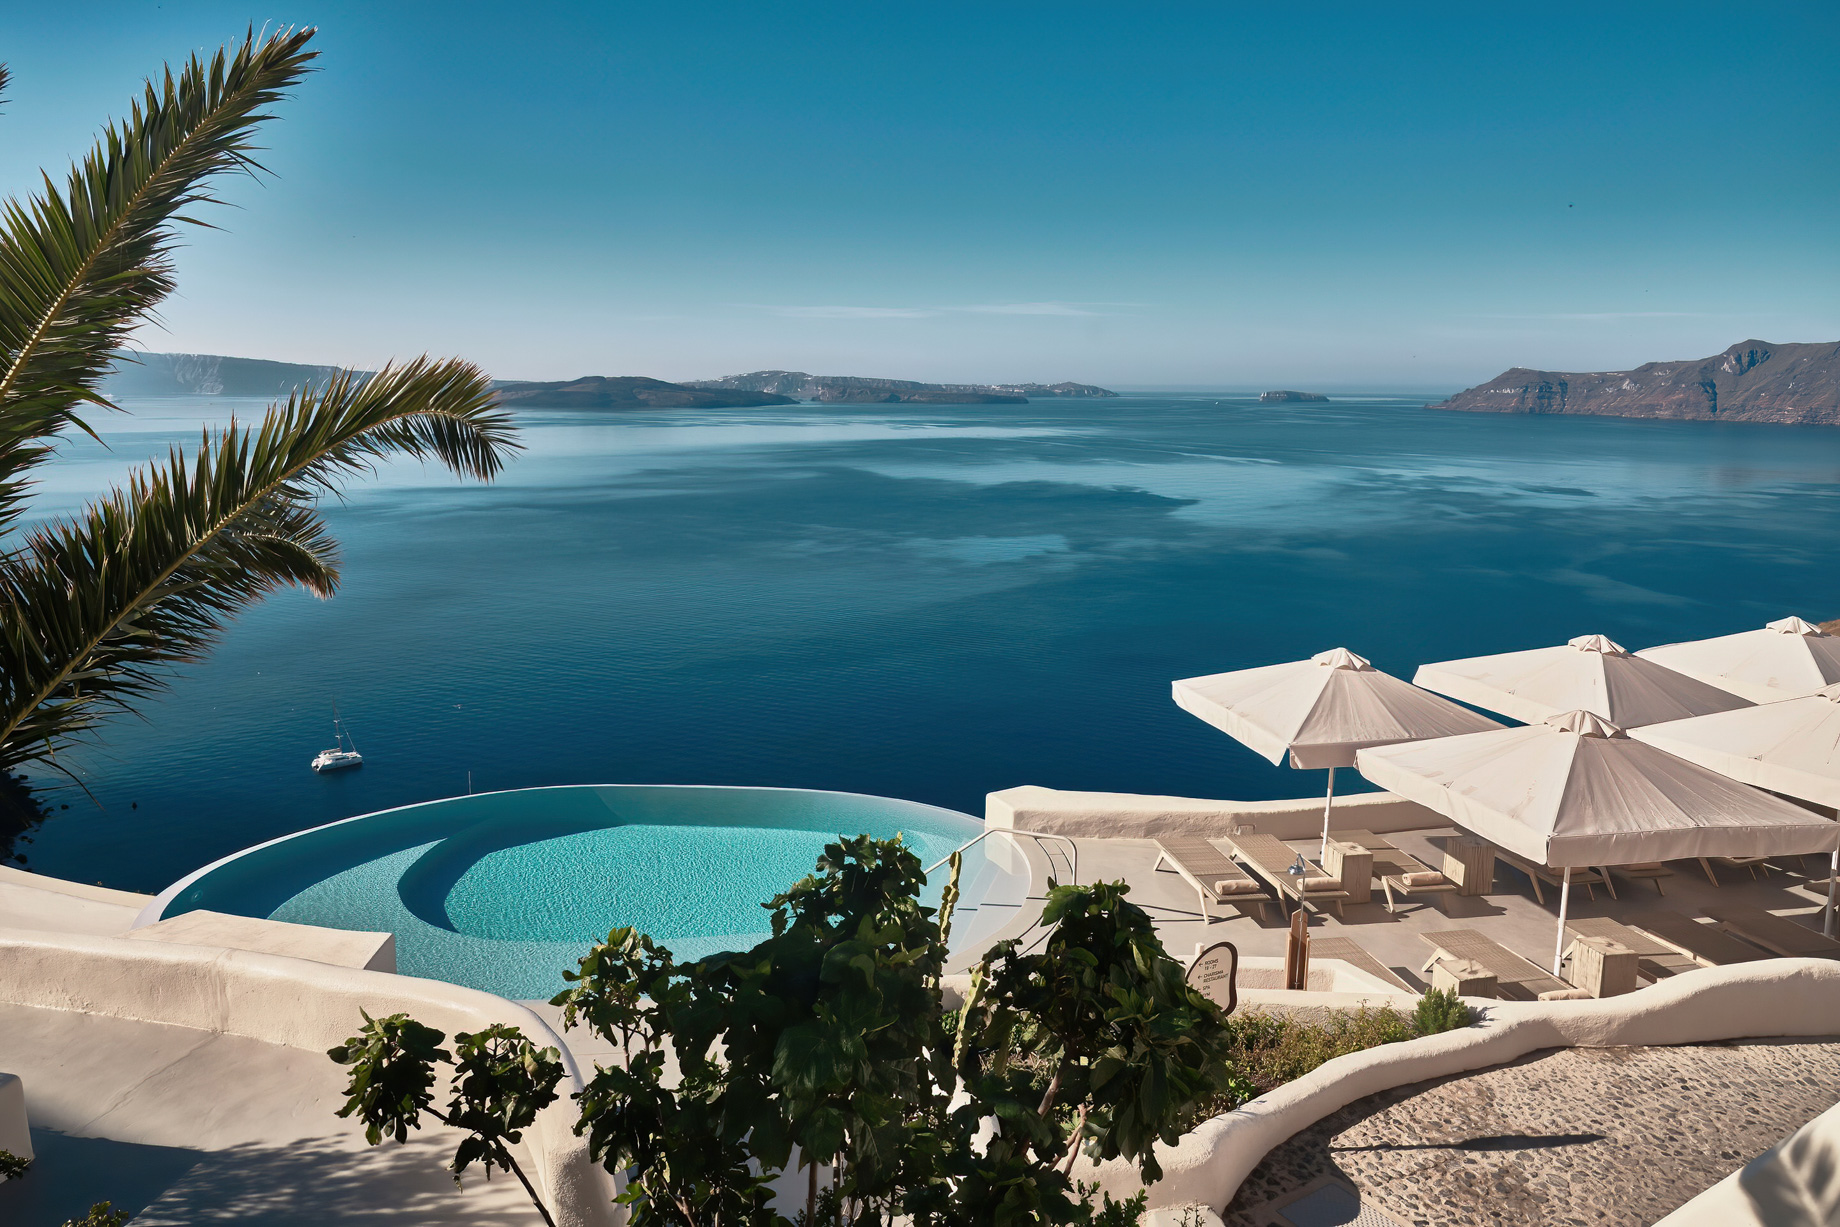 Mystique Hotel Santorini – Oia, Santorini Island, Greece – Clifftop Main Infinity Pool